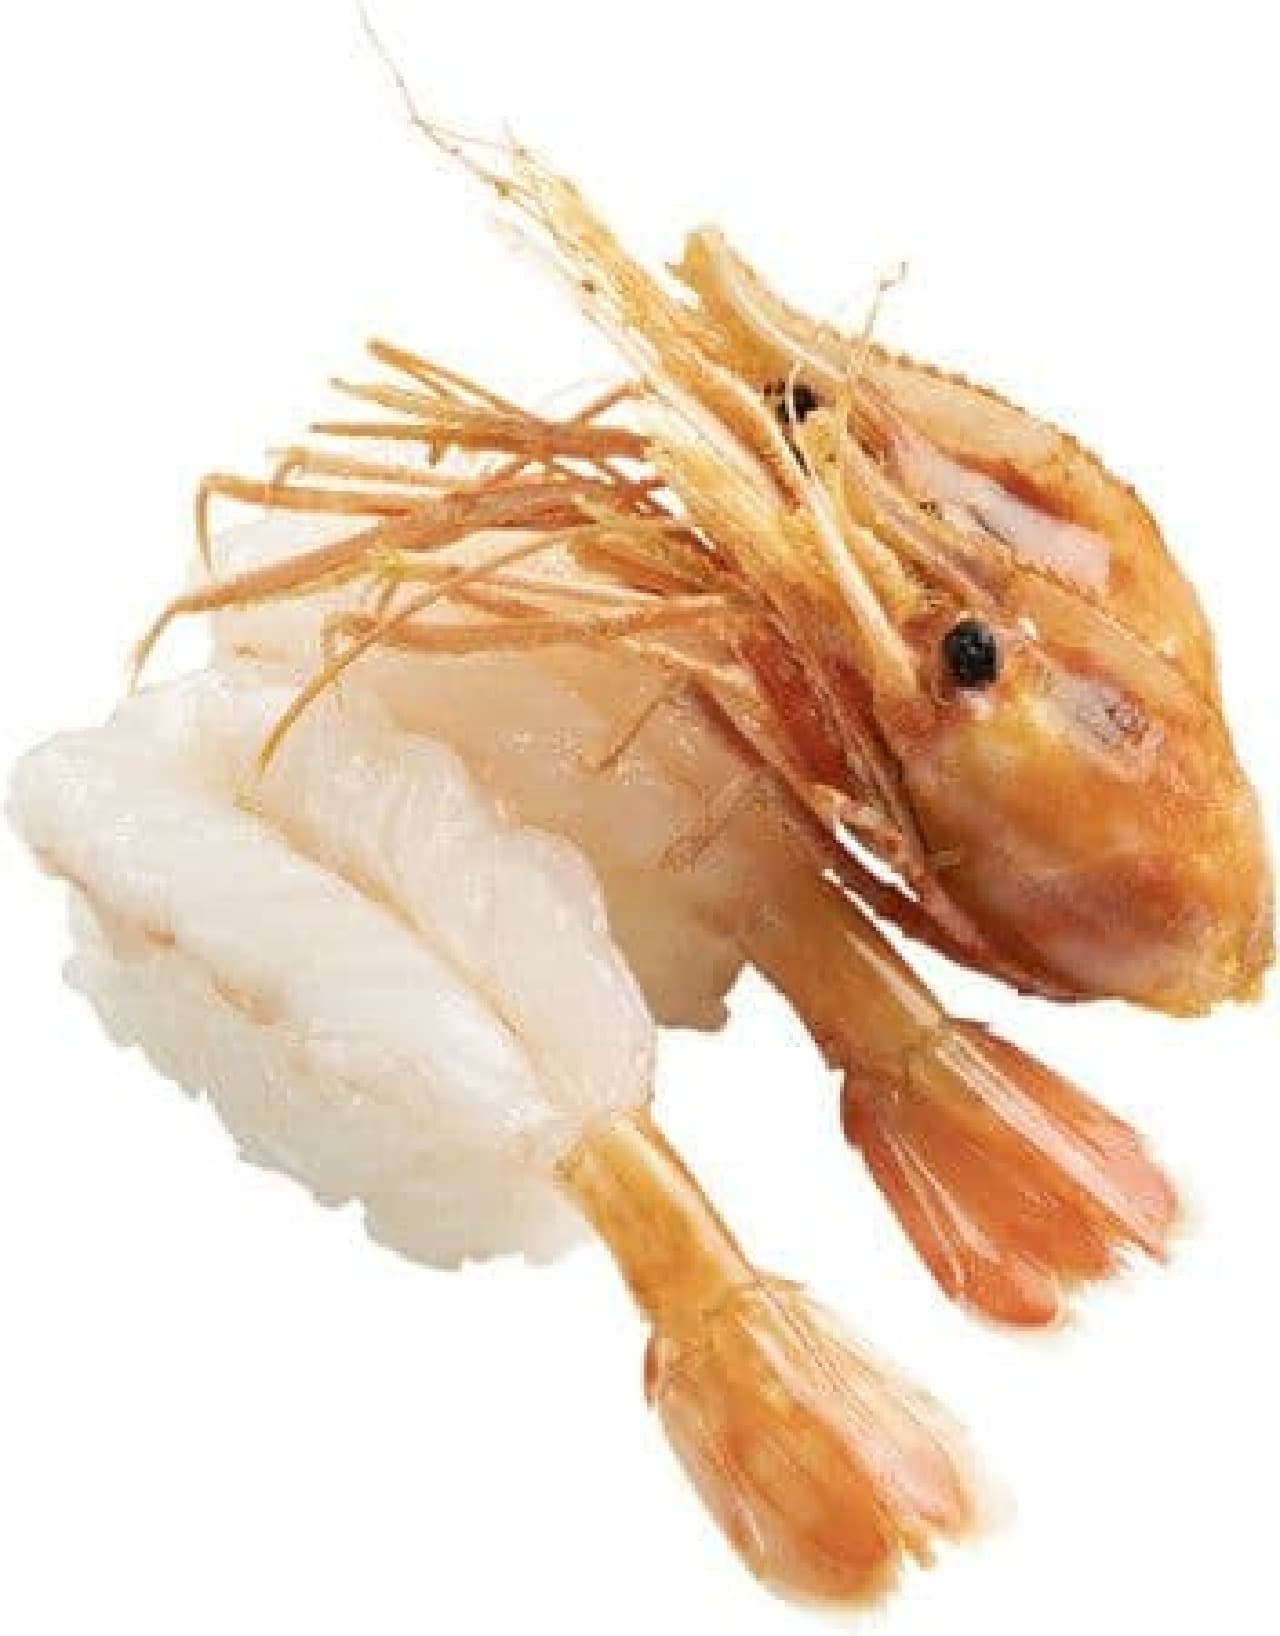 Sushiro "Double Botan Shrimp"